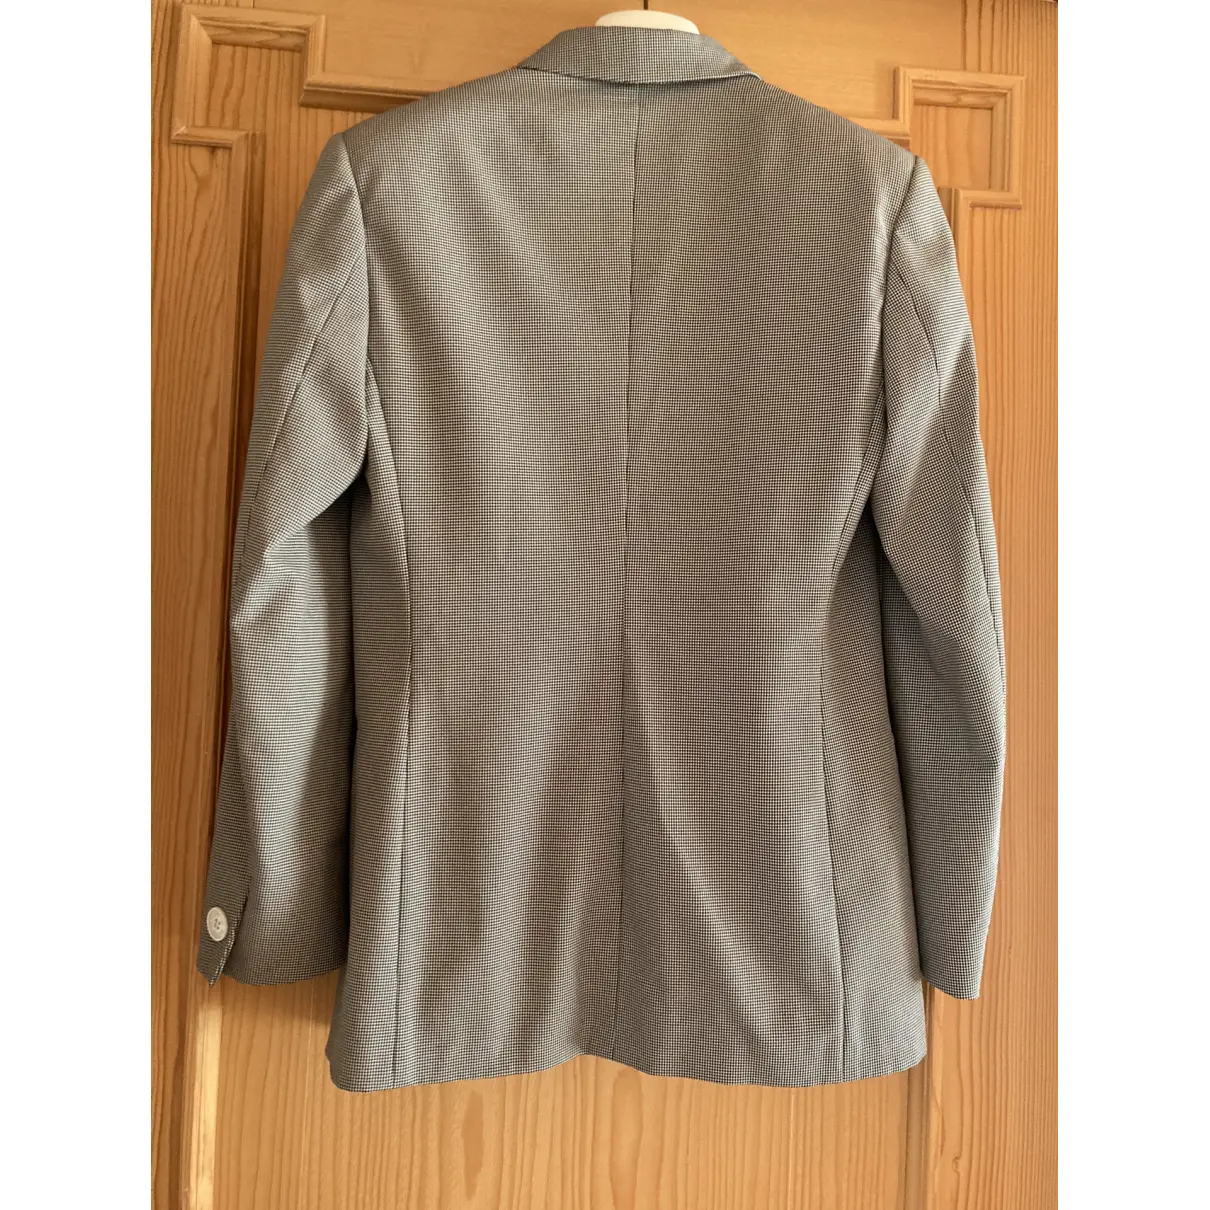 Buy Burberry Suit jacket online - Vintage